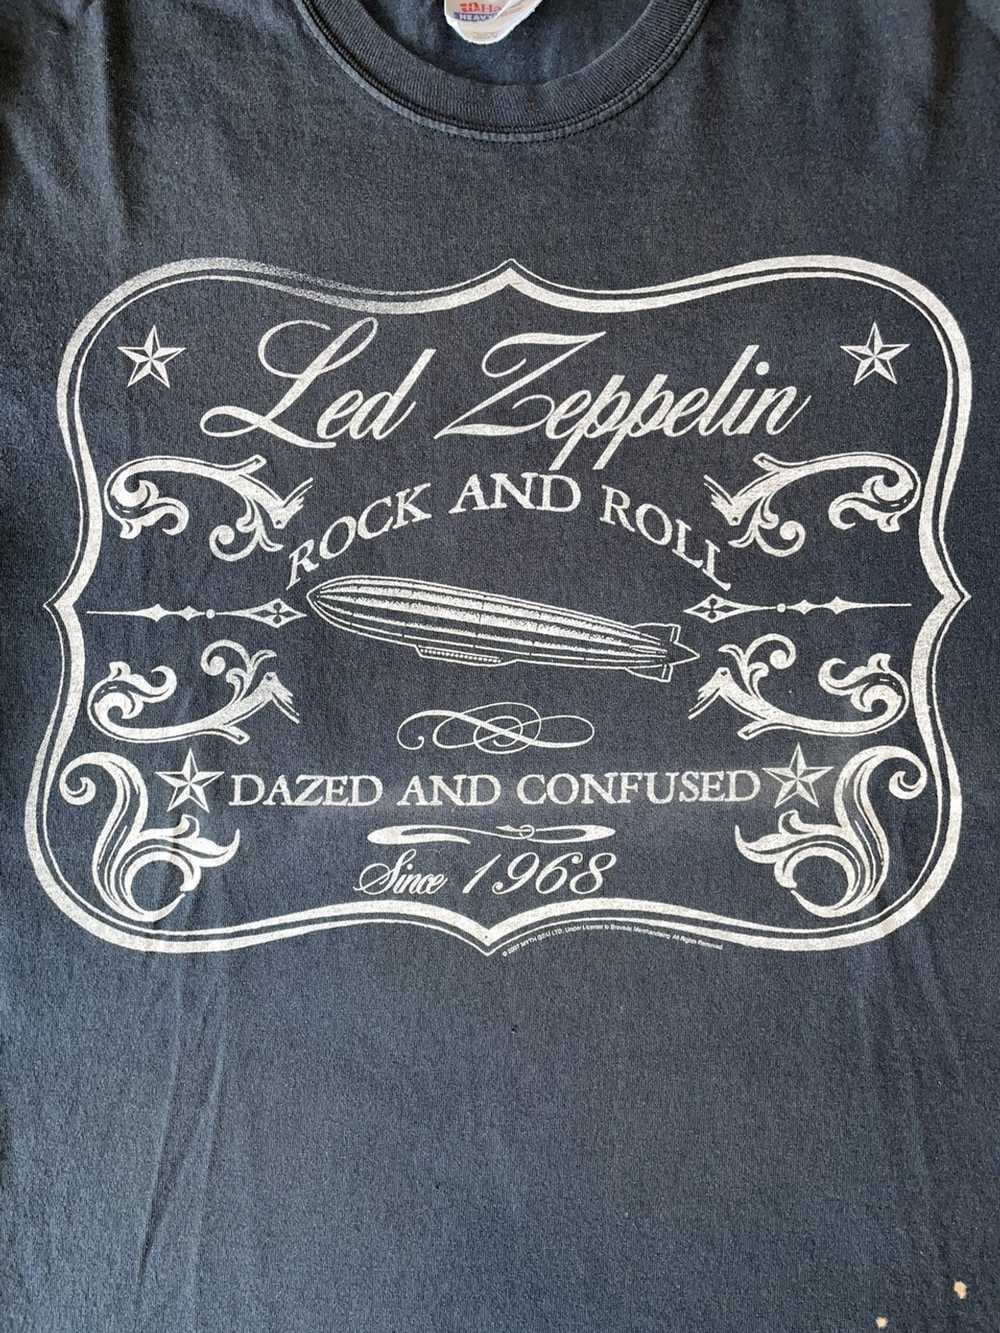 Led Zeppelin × Vintage Y2K Led Zeppelin tee - image 3